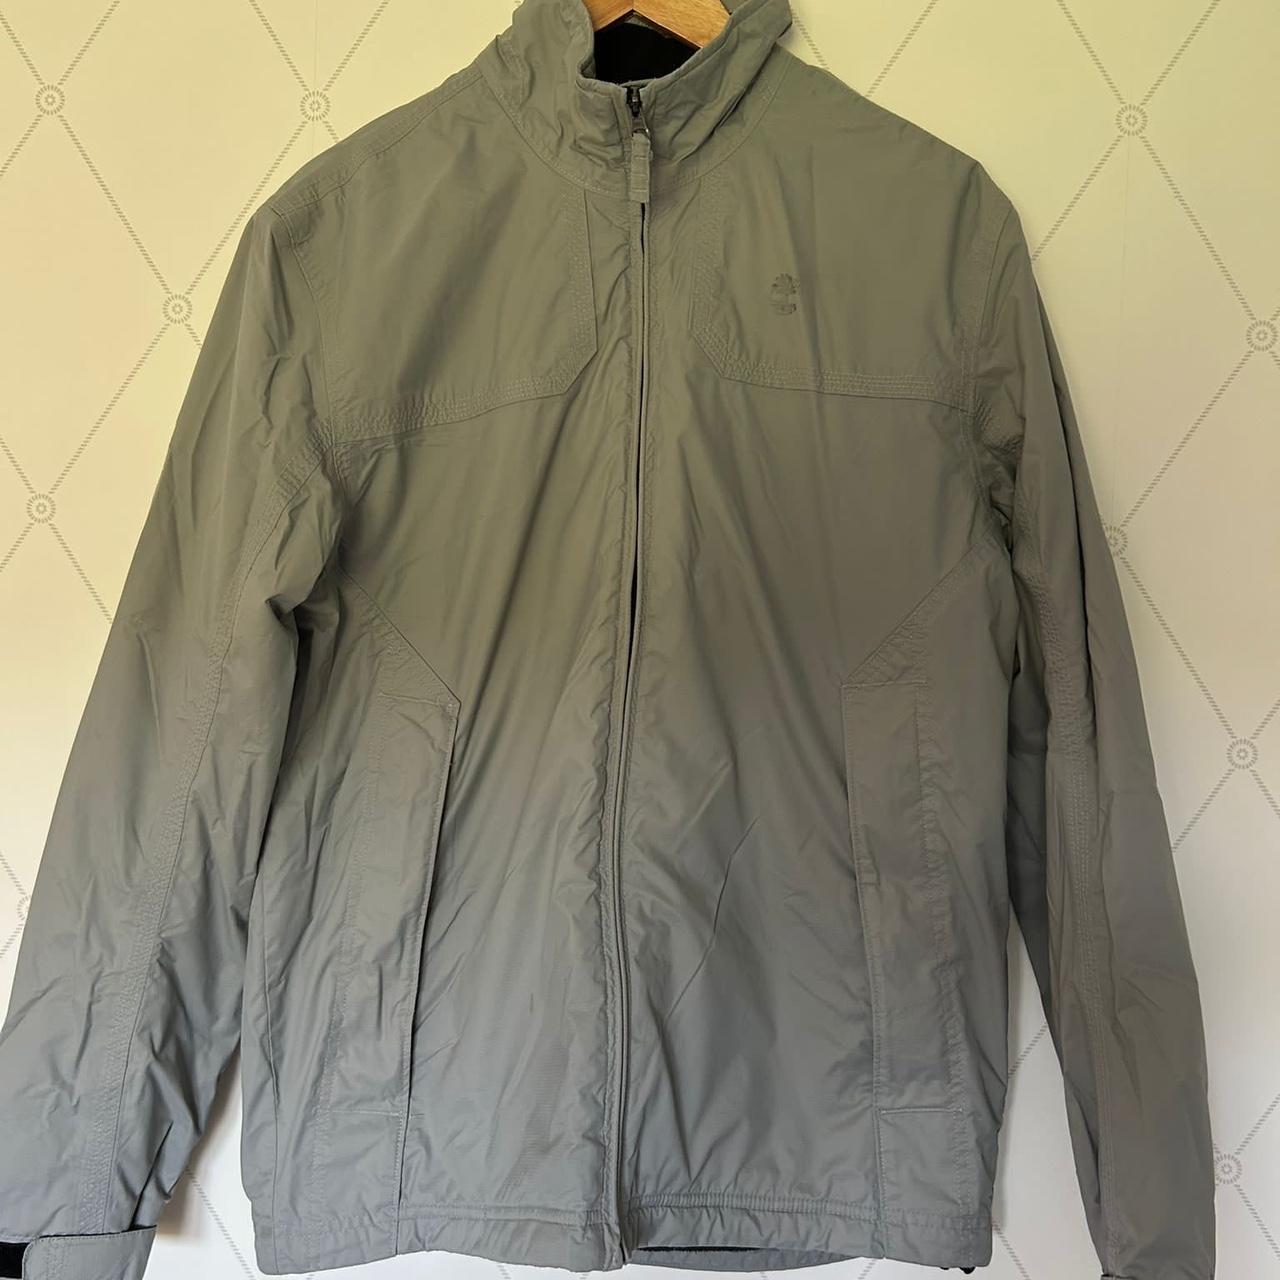 Timberland Grey Jacket, waterproof #timberland... - Depop